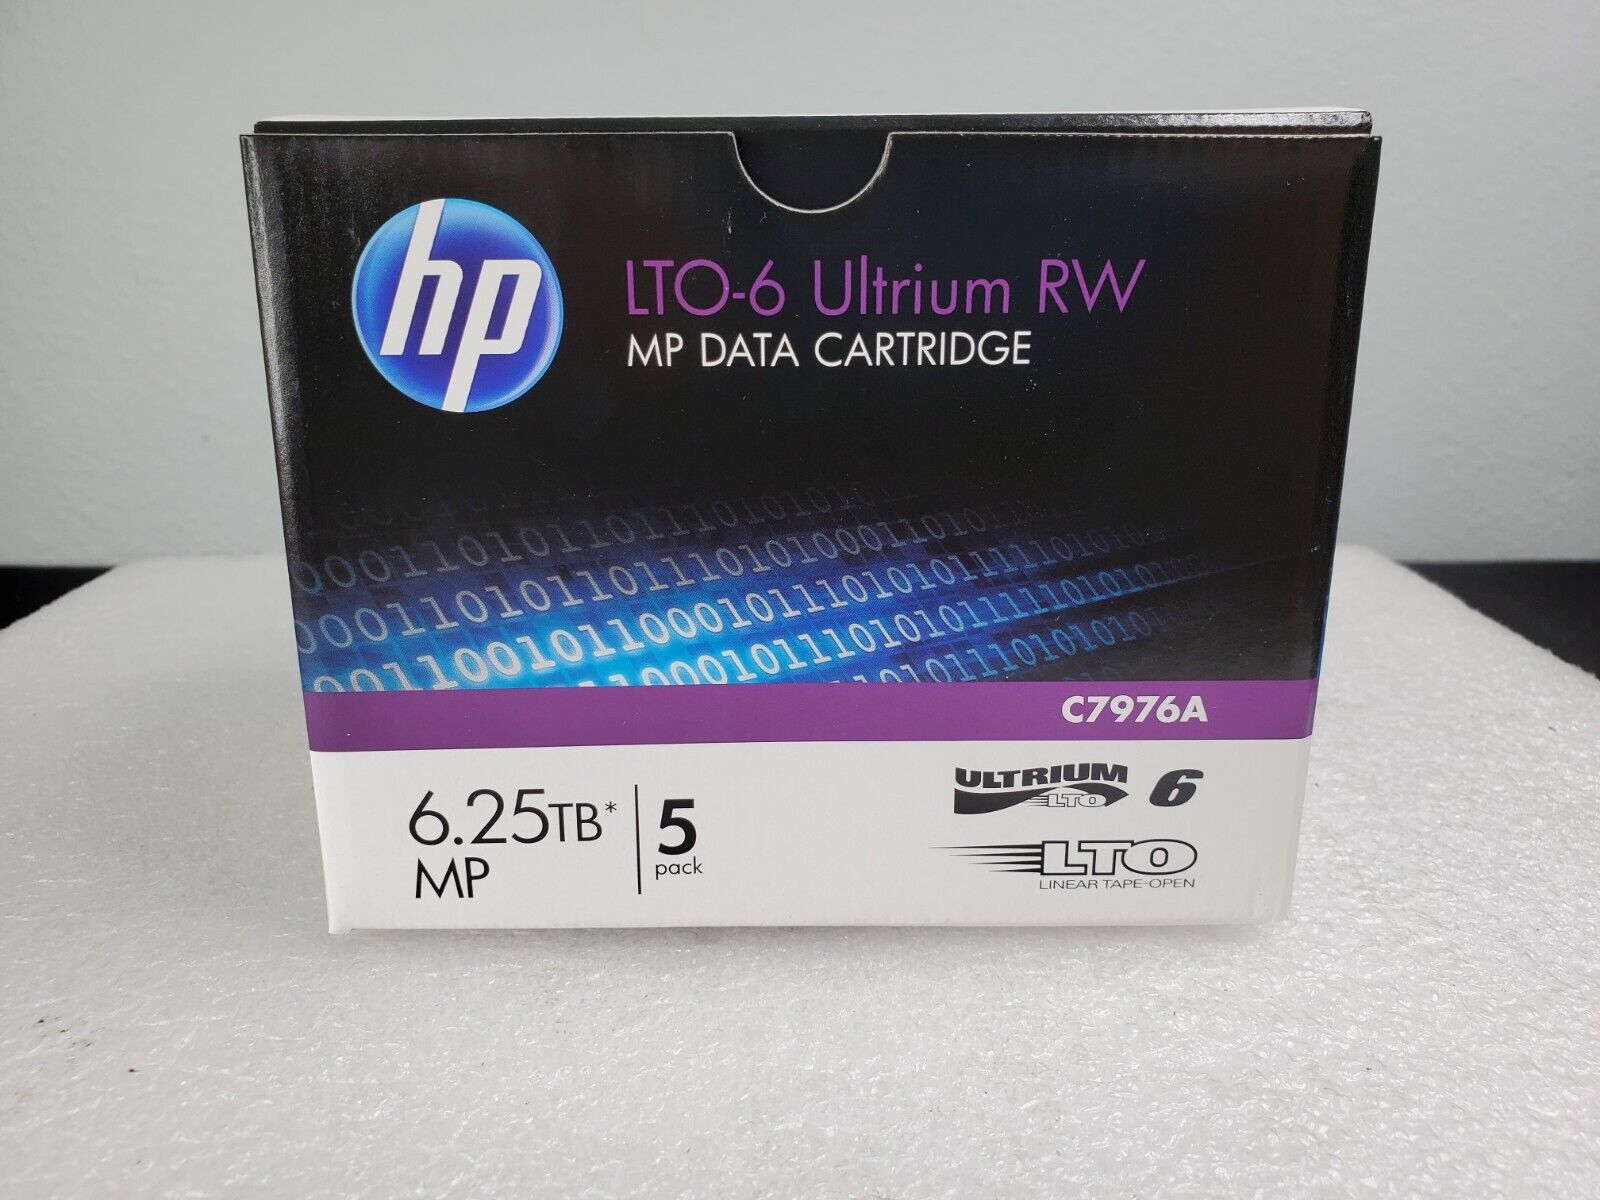 HP C7976A LTO-6 Ultrium 6.25TB MP RW Data Cartridge 1 Box (5) pack